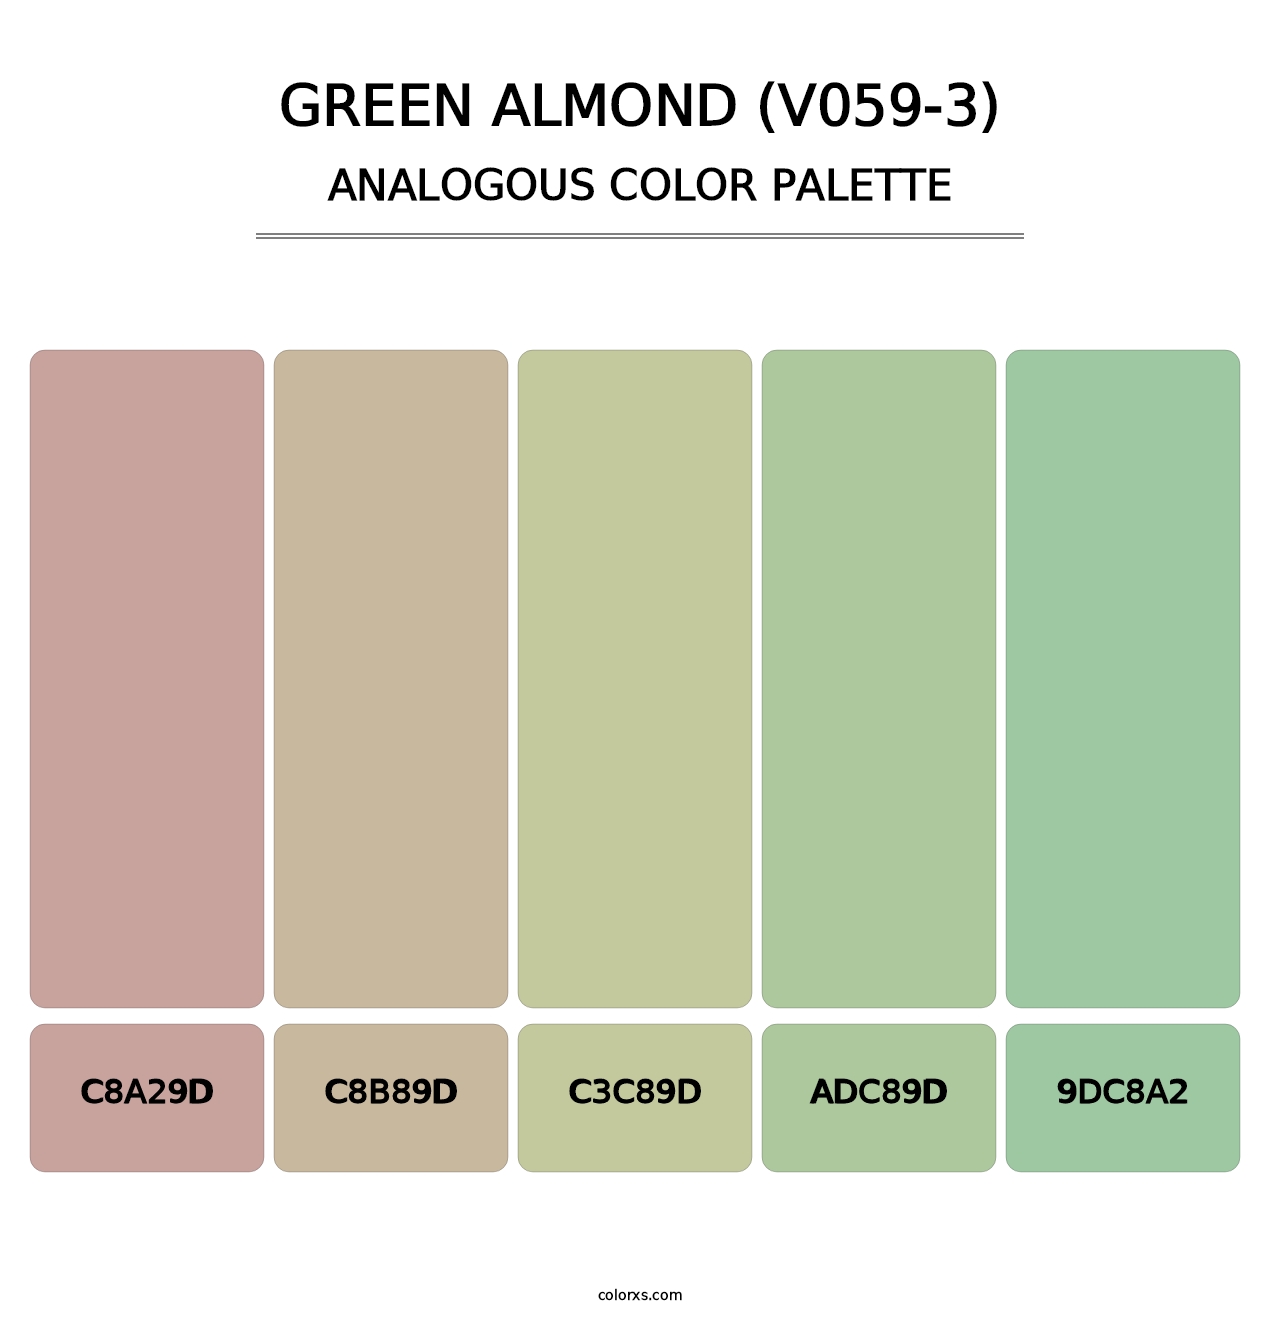 Green Almond (V059-3) - Analogous Color Palette